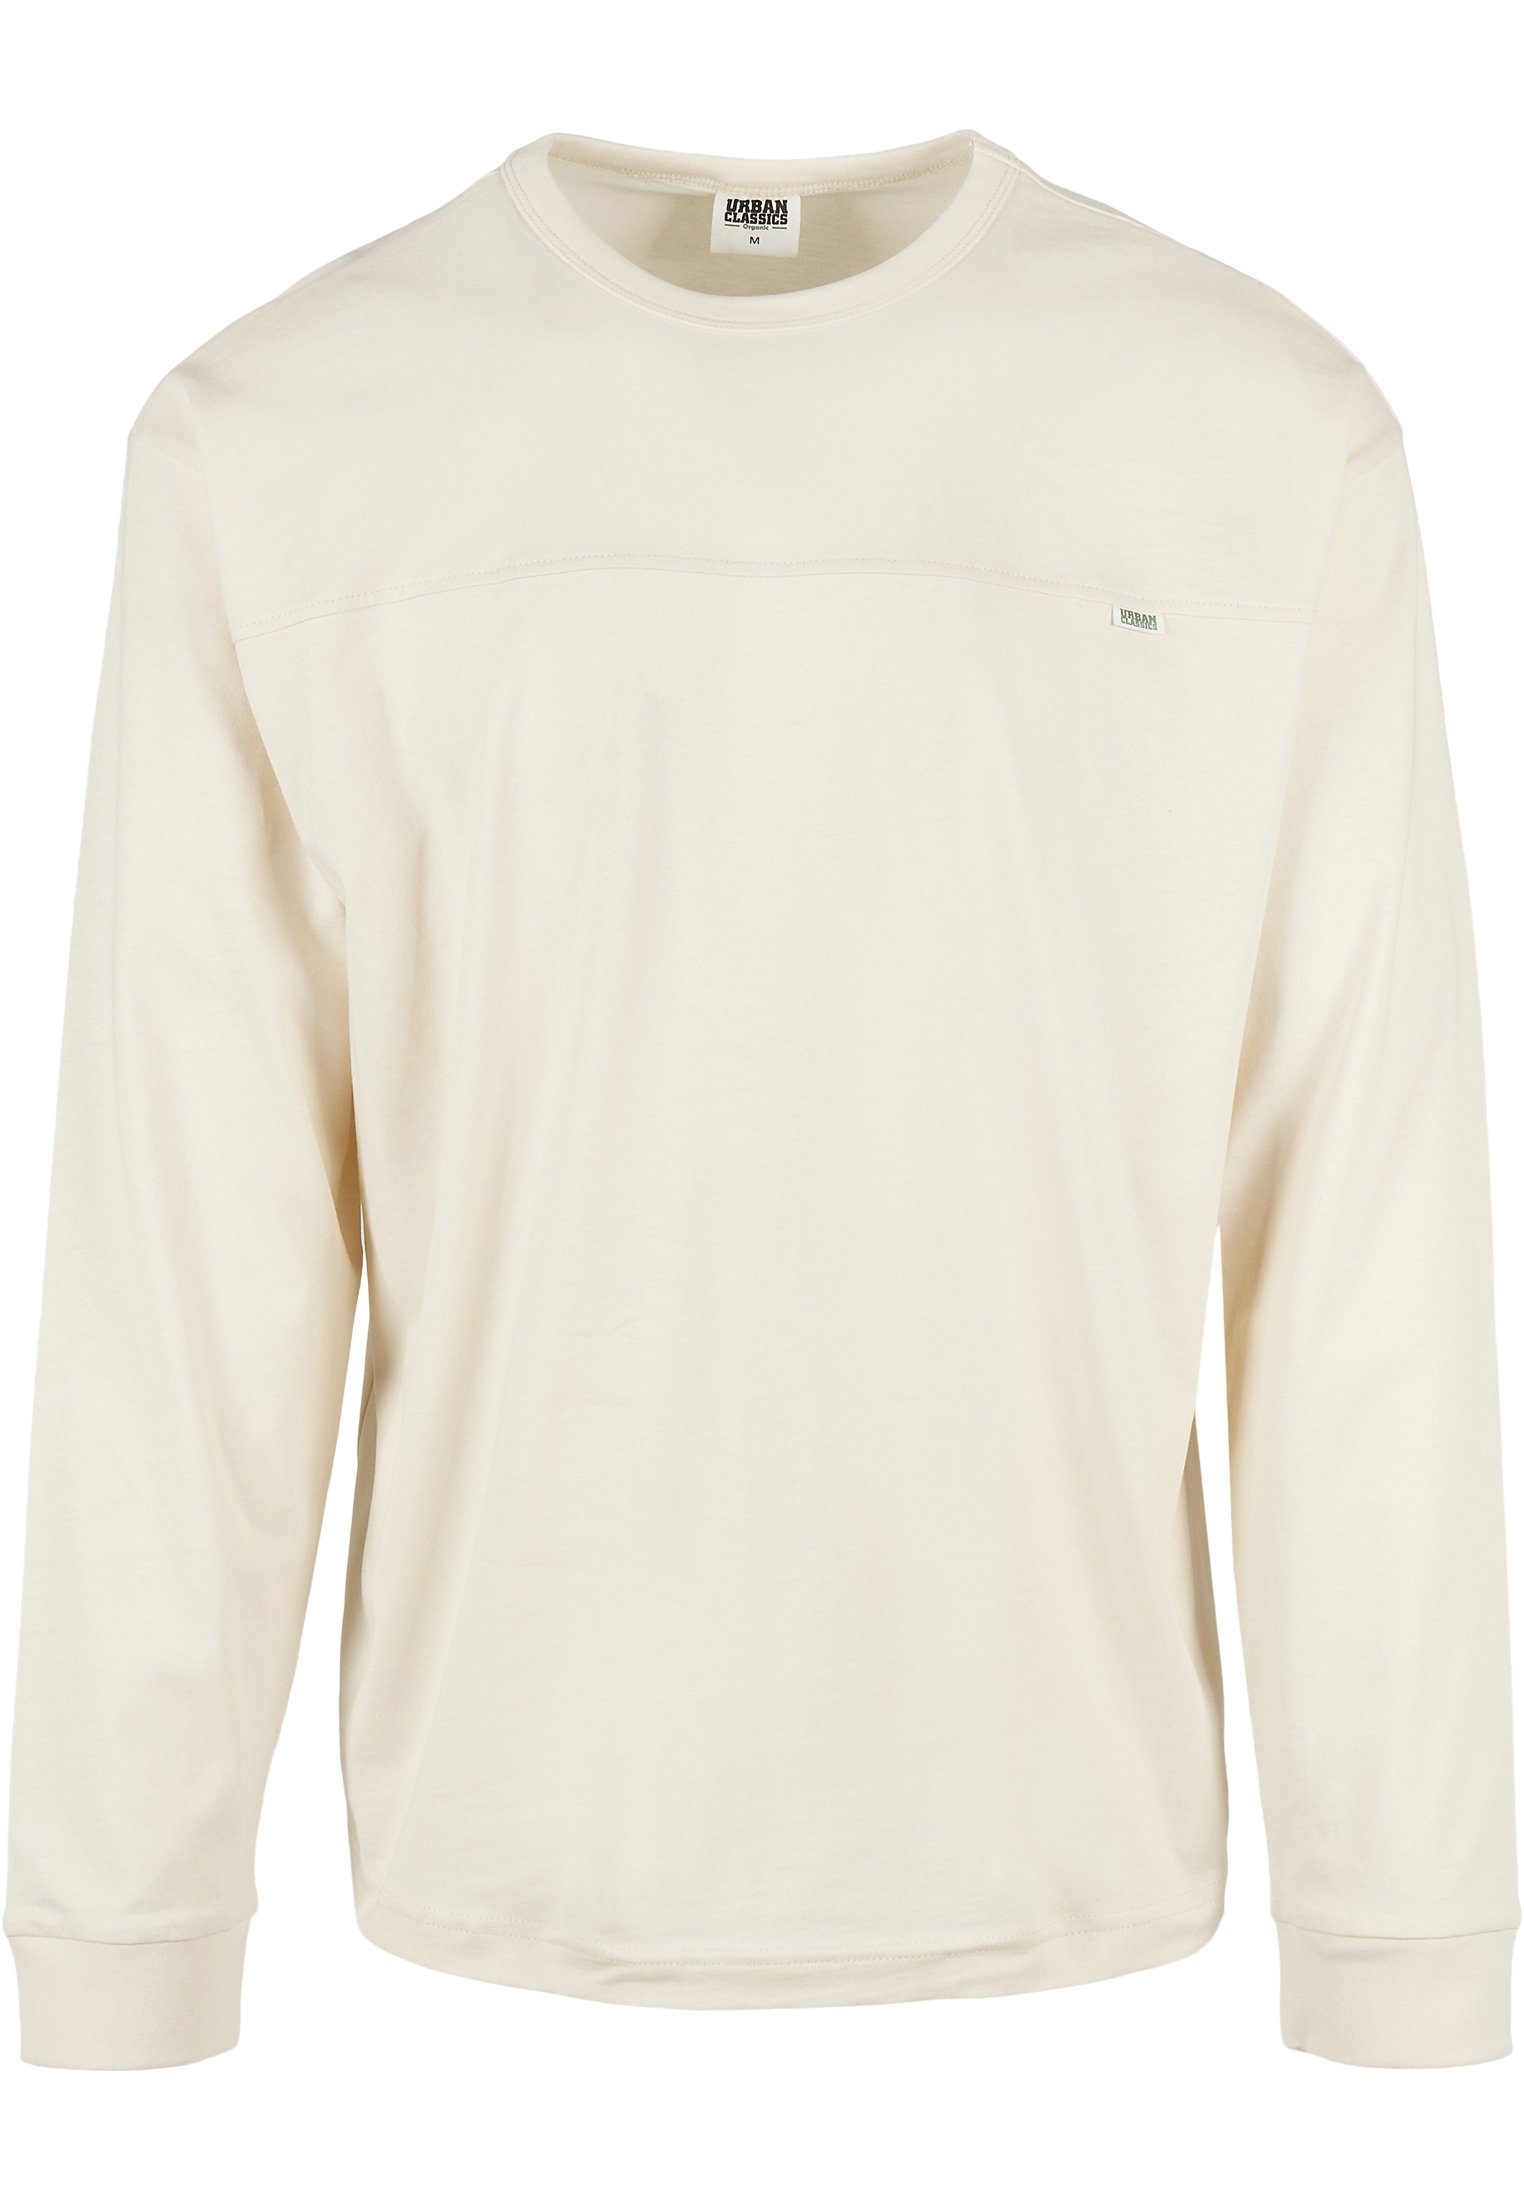 T-Shirt Oversized whitesand Männer Cotton Curved (1-tlg) URBAN CLASSICS Organic LS Short